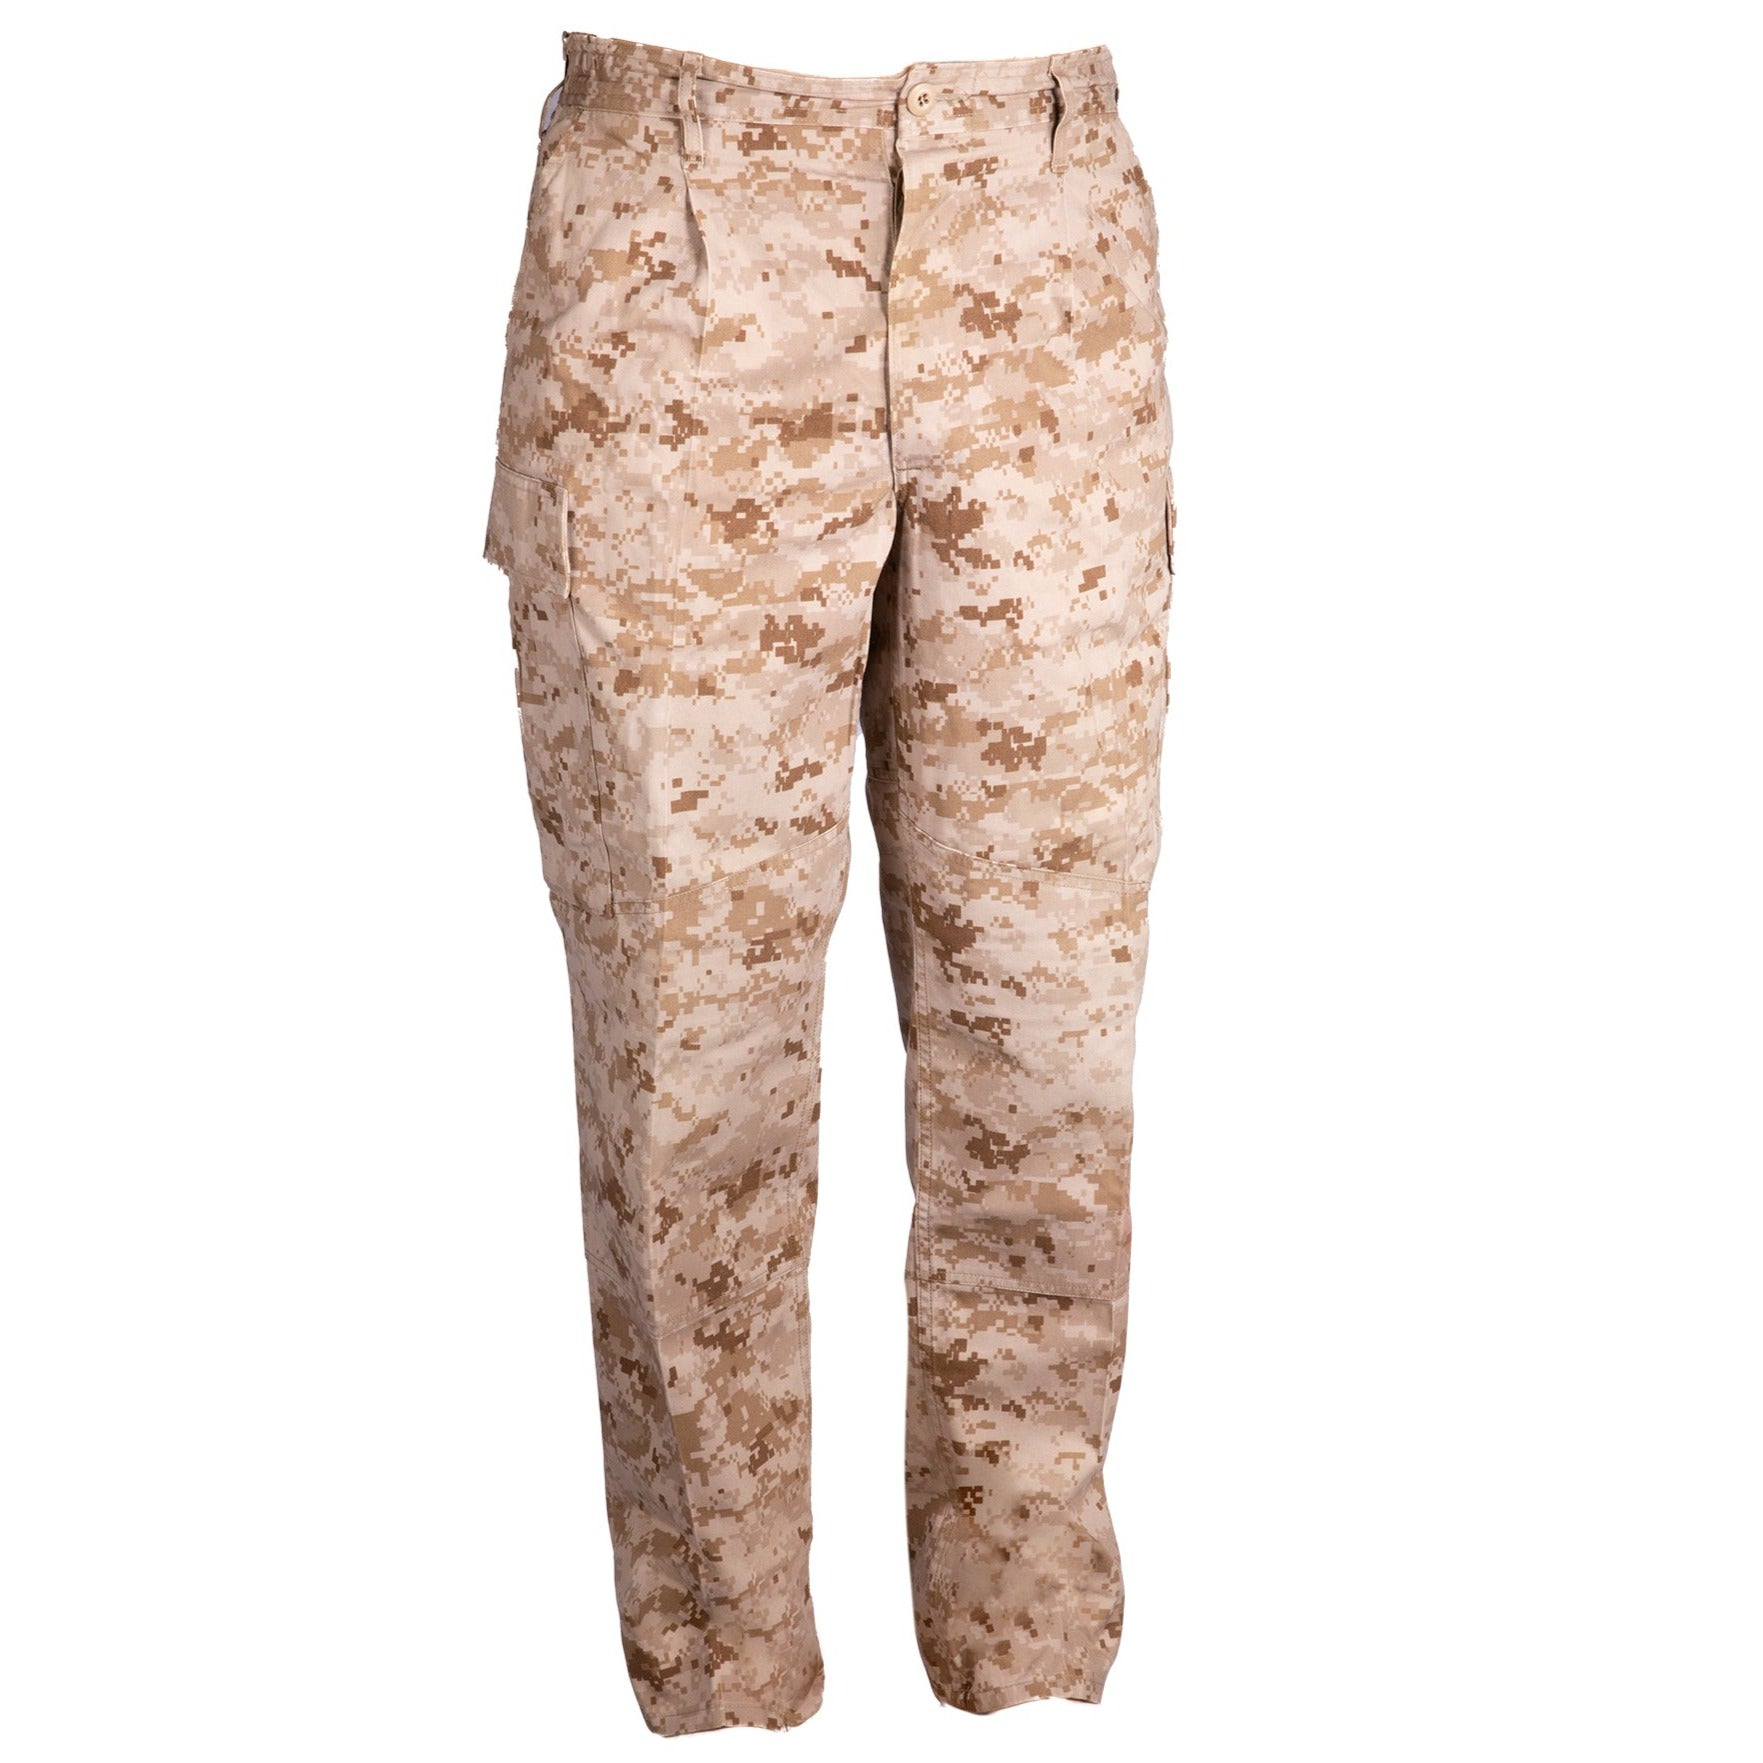 NAVY NWU Type II Desert Digital Trouser USN AOR1 Tan Desert Camo Pants